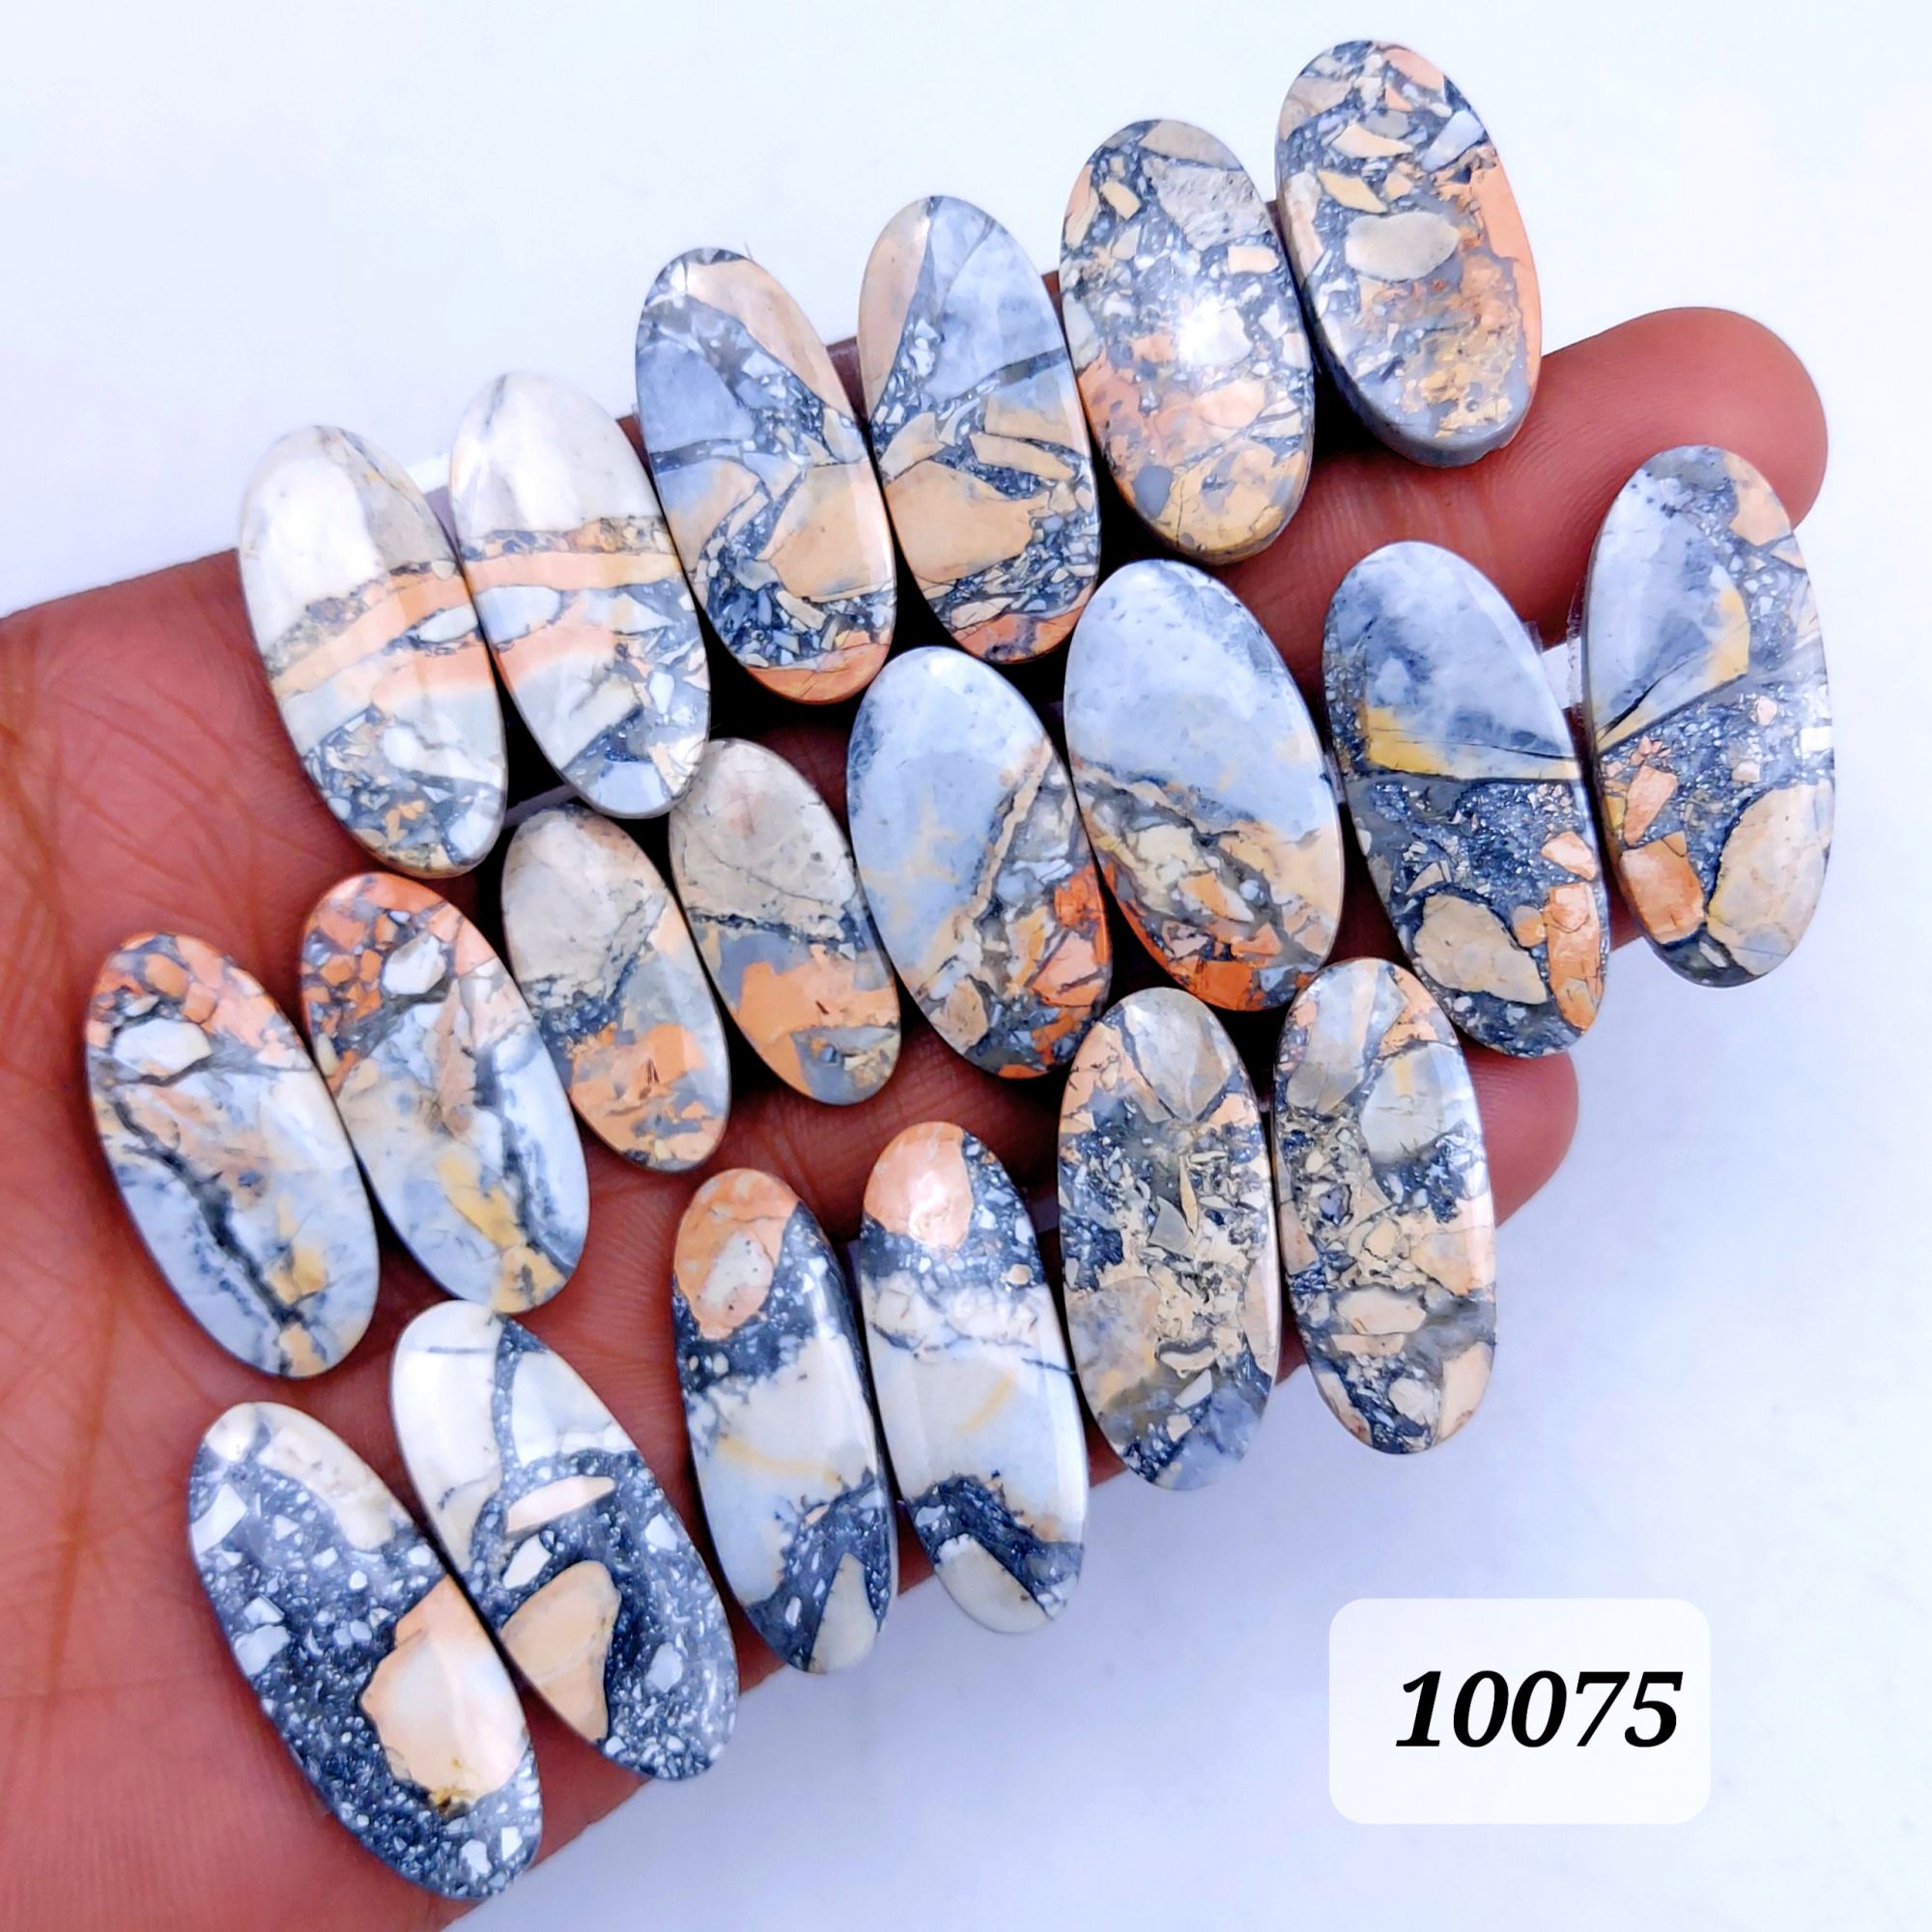 10Pcs 390Cts Natural Maligano Jasper Cabochon Pair Lot Back Side Unpolished Semi-Precious Gemstones For Jewelry Making 32x13 25x12mm #10075